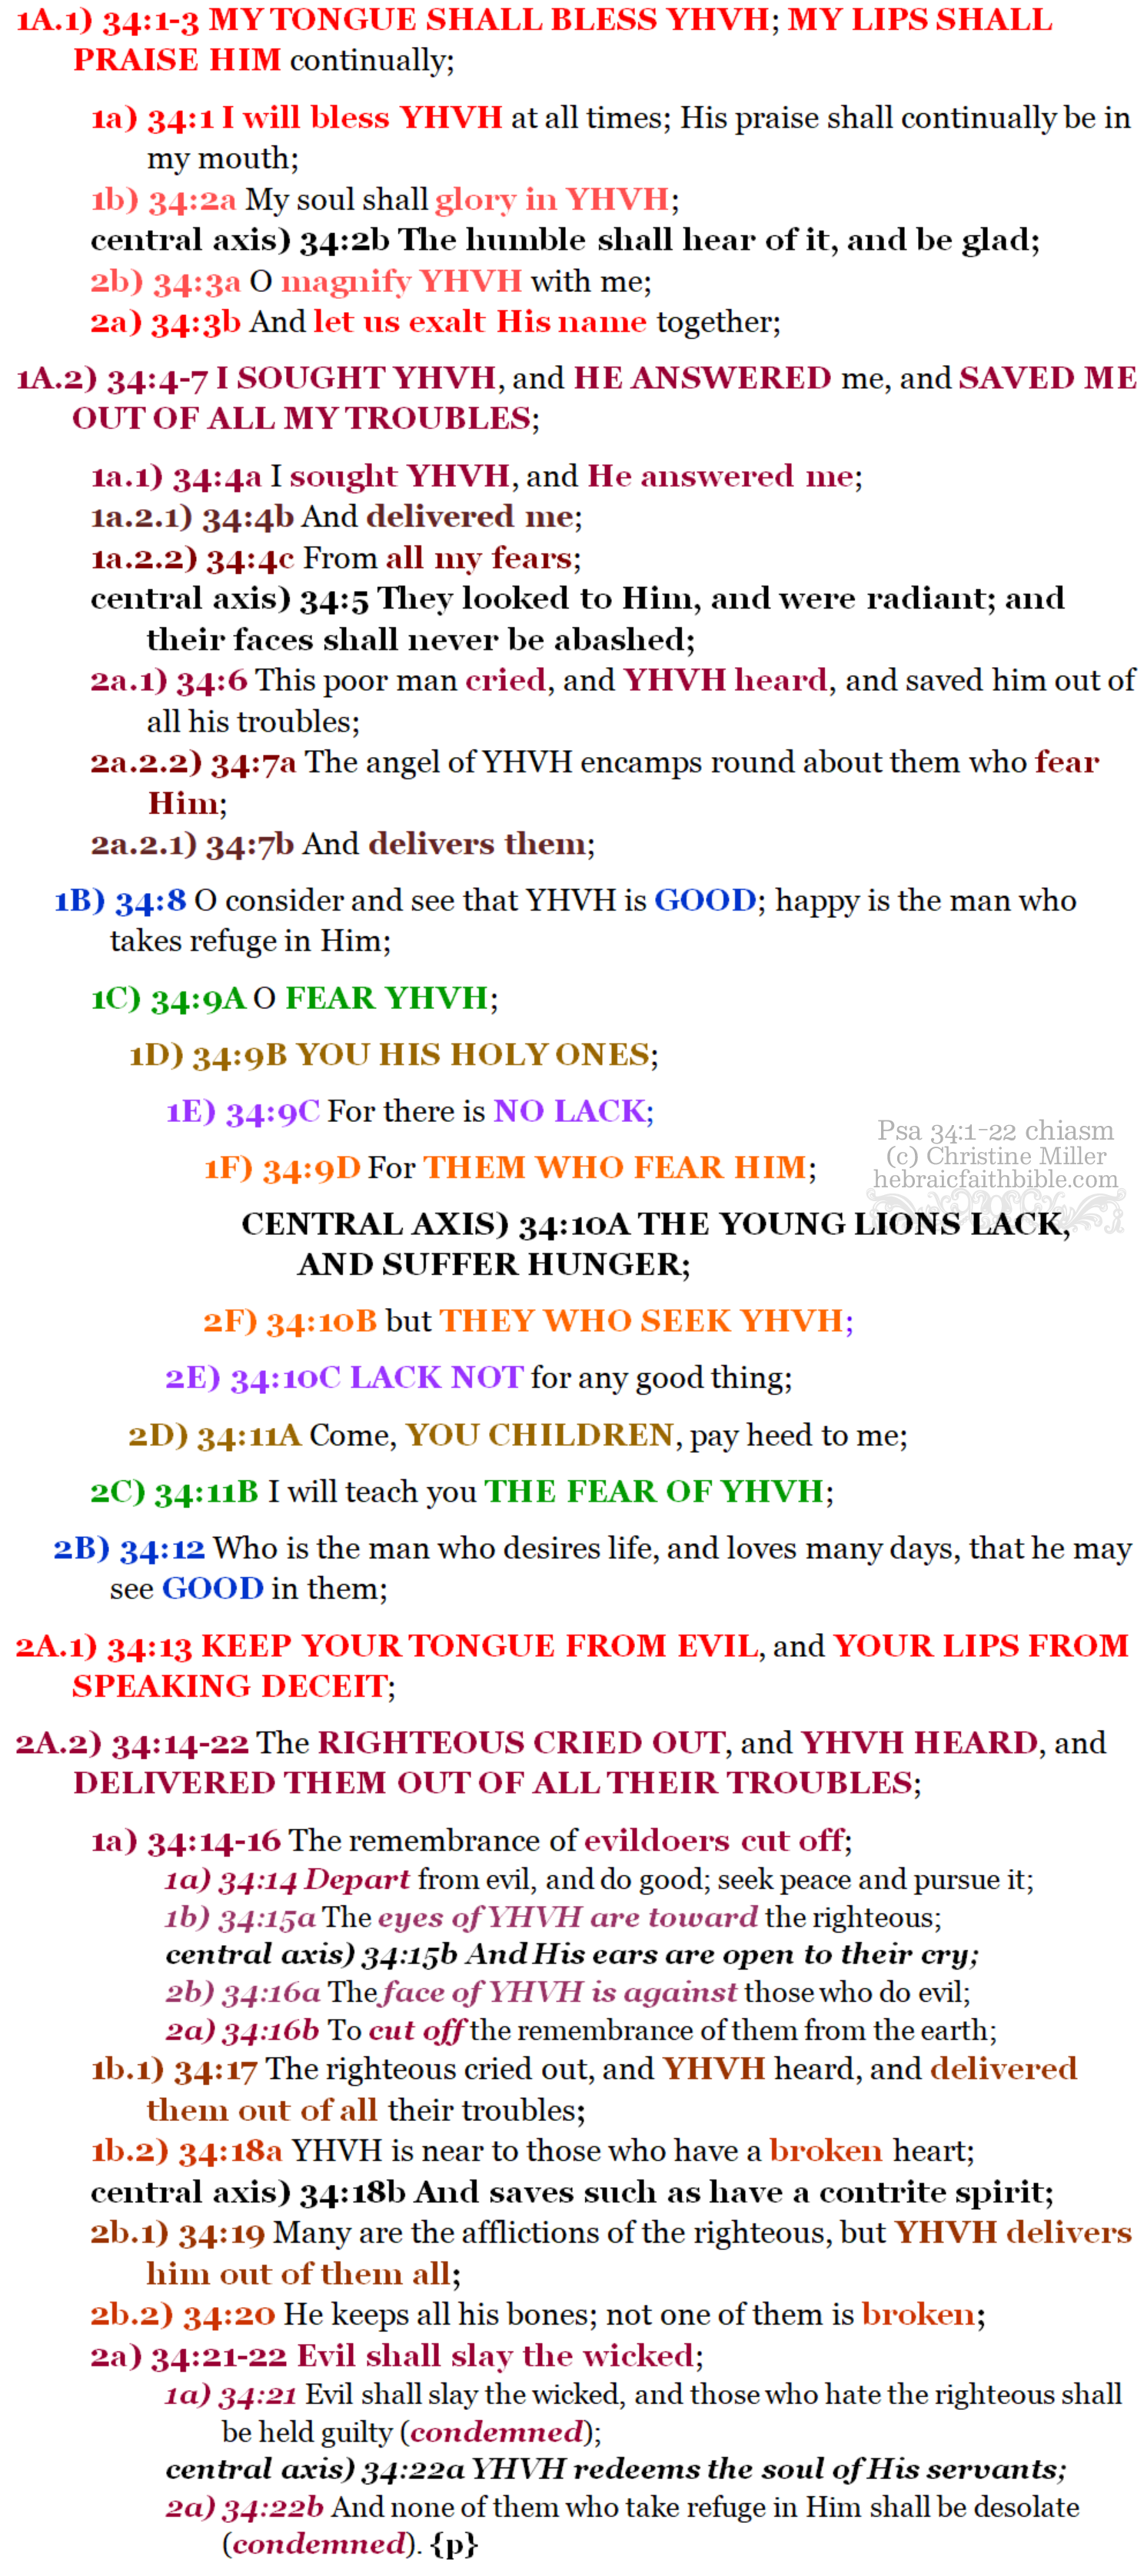 Psa 34:1-22 {p} chiasm | hebraicfaithbible.com